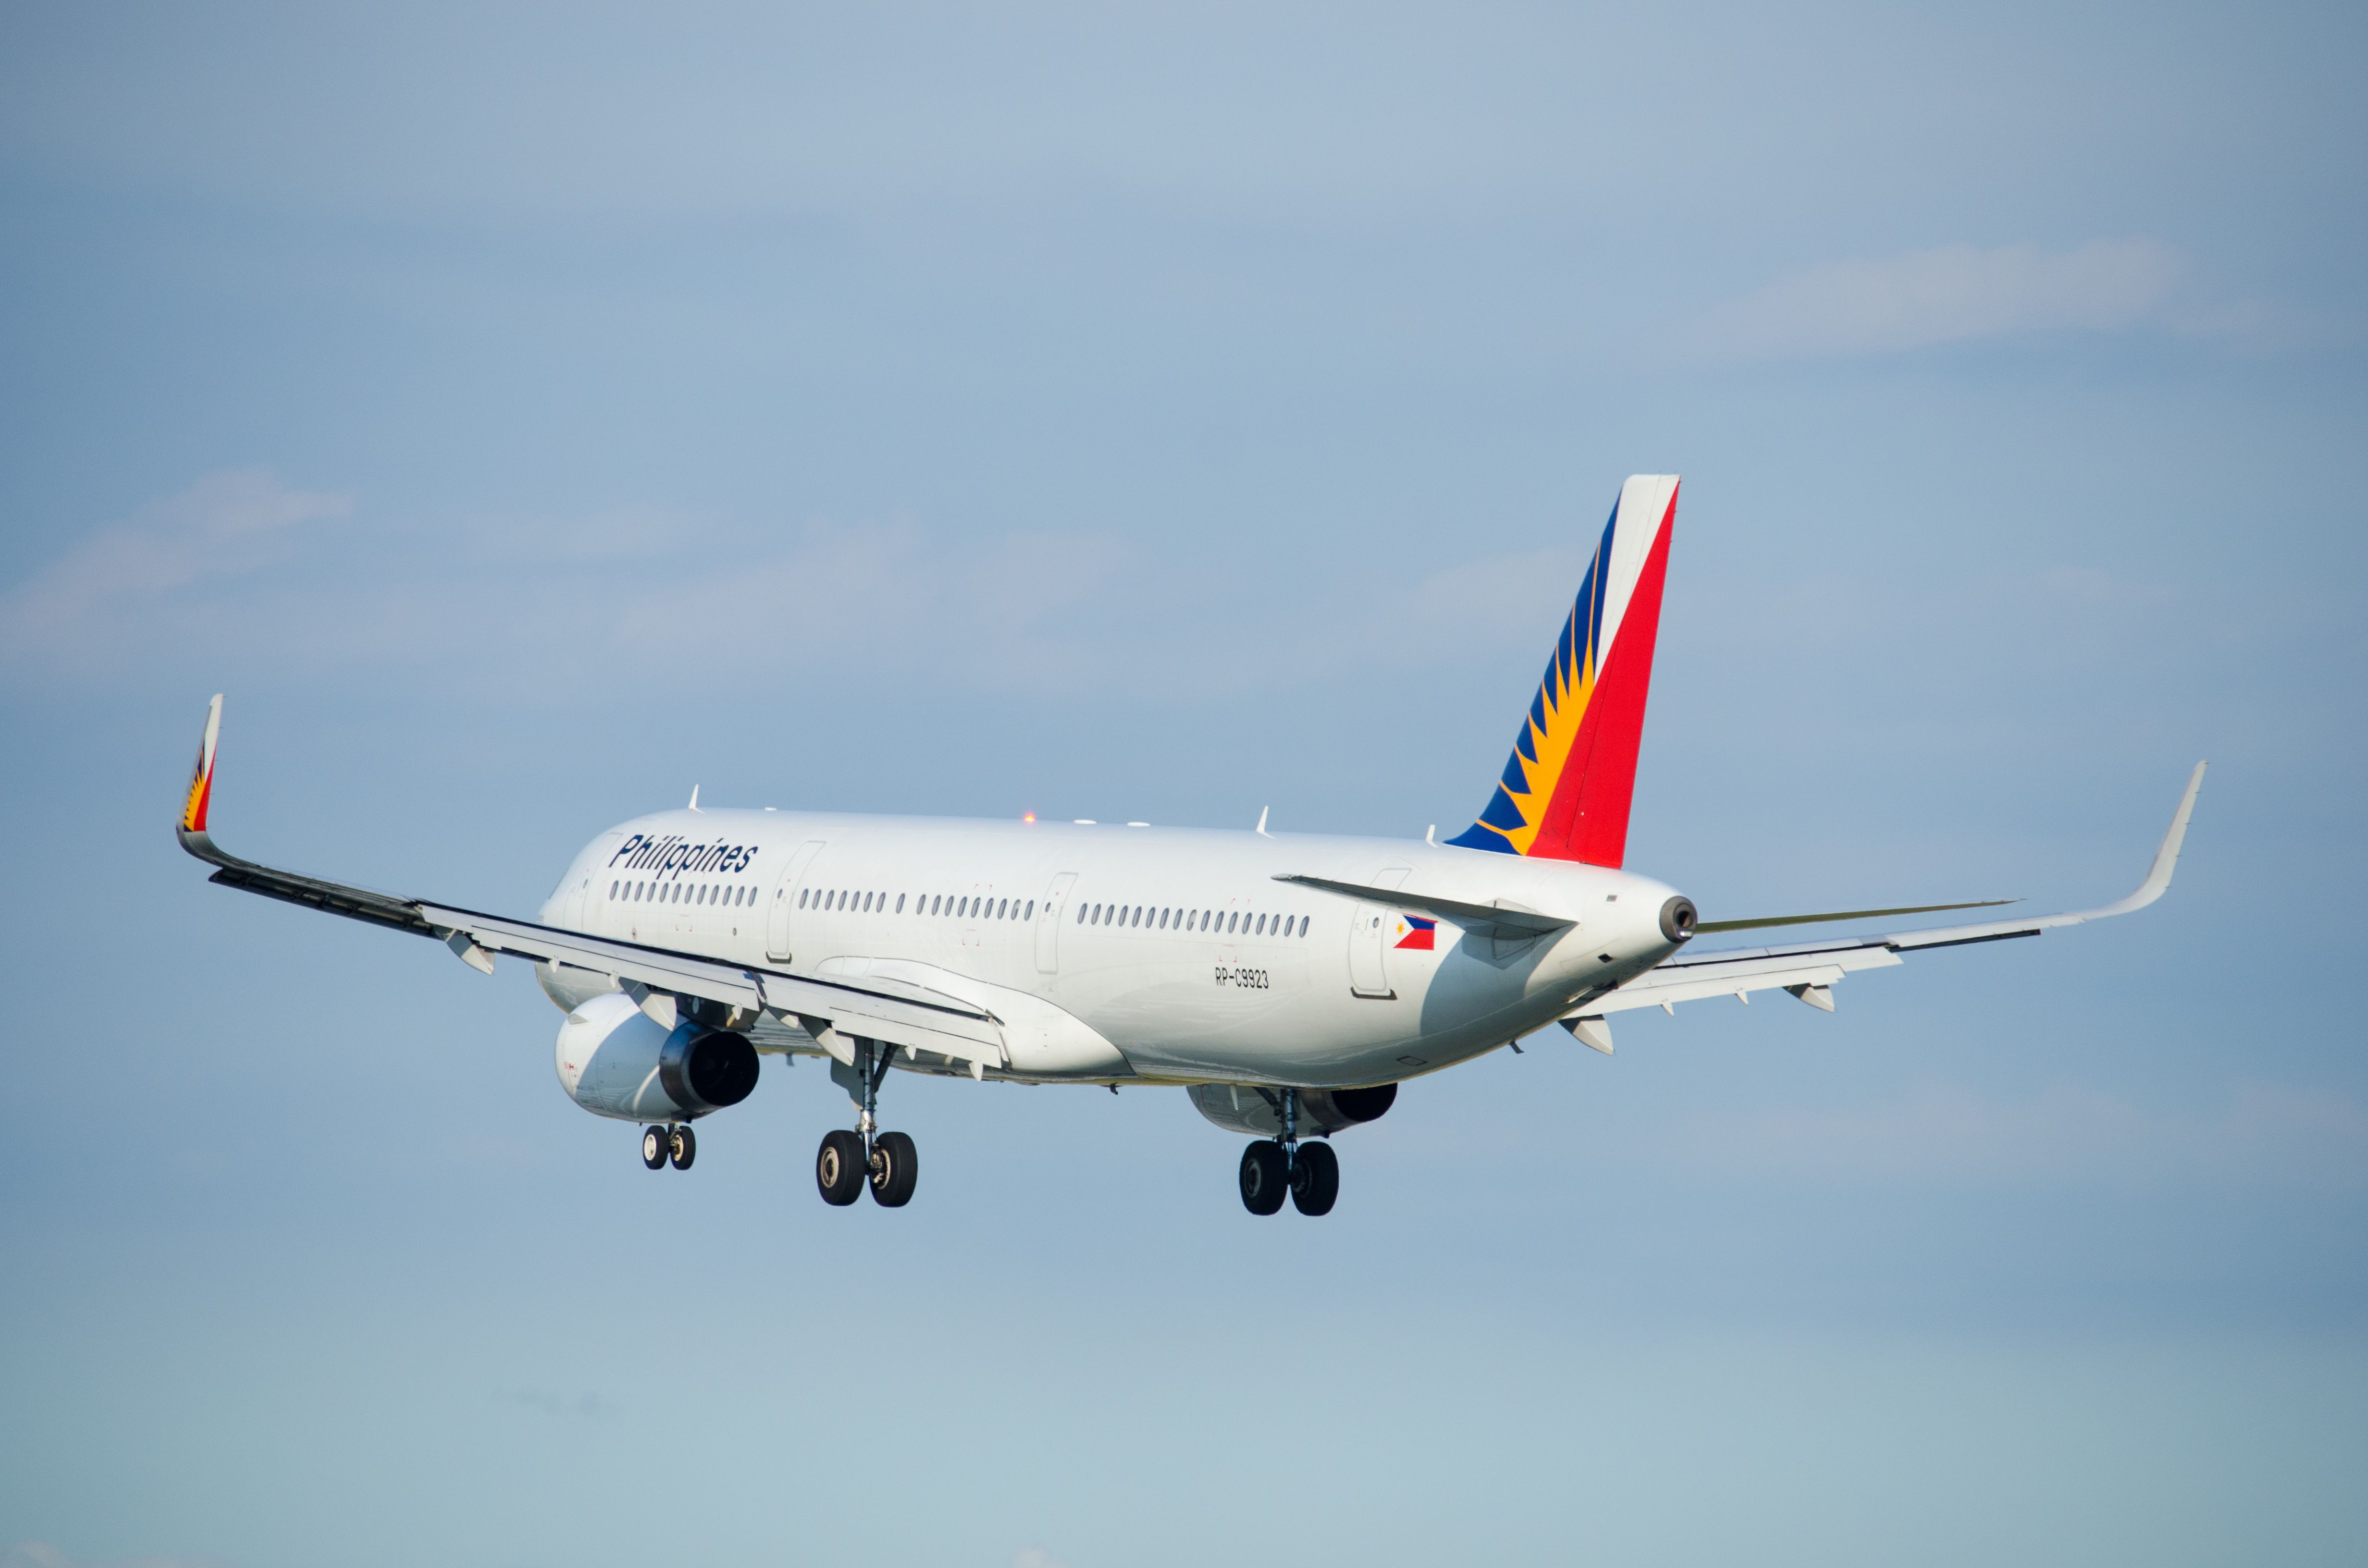 Philippine Airlines A320 landing at Ninoy Aquino International Airport, Manila